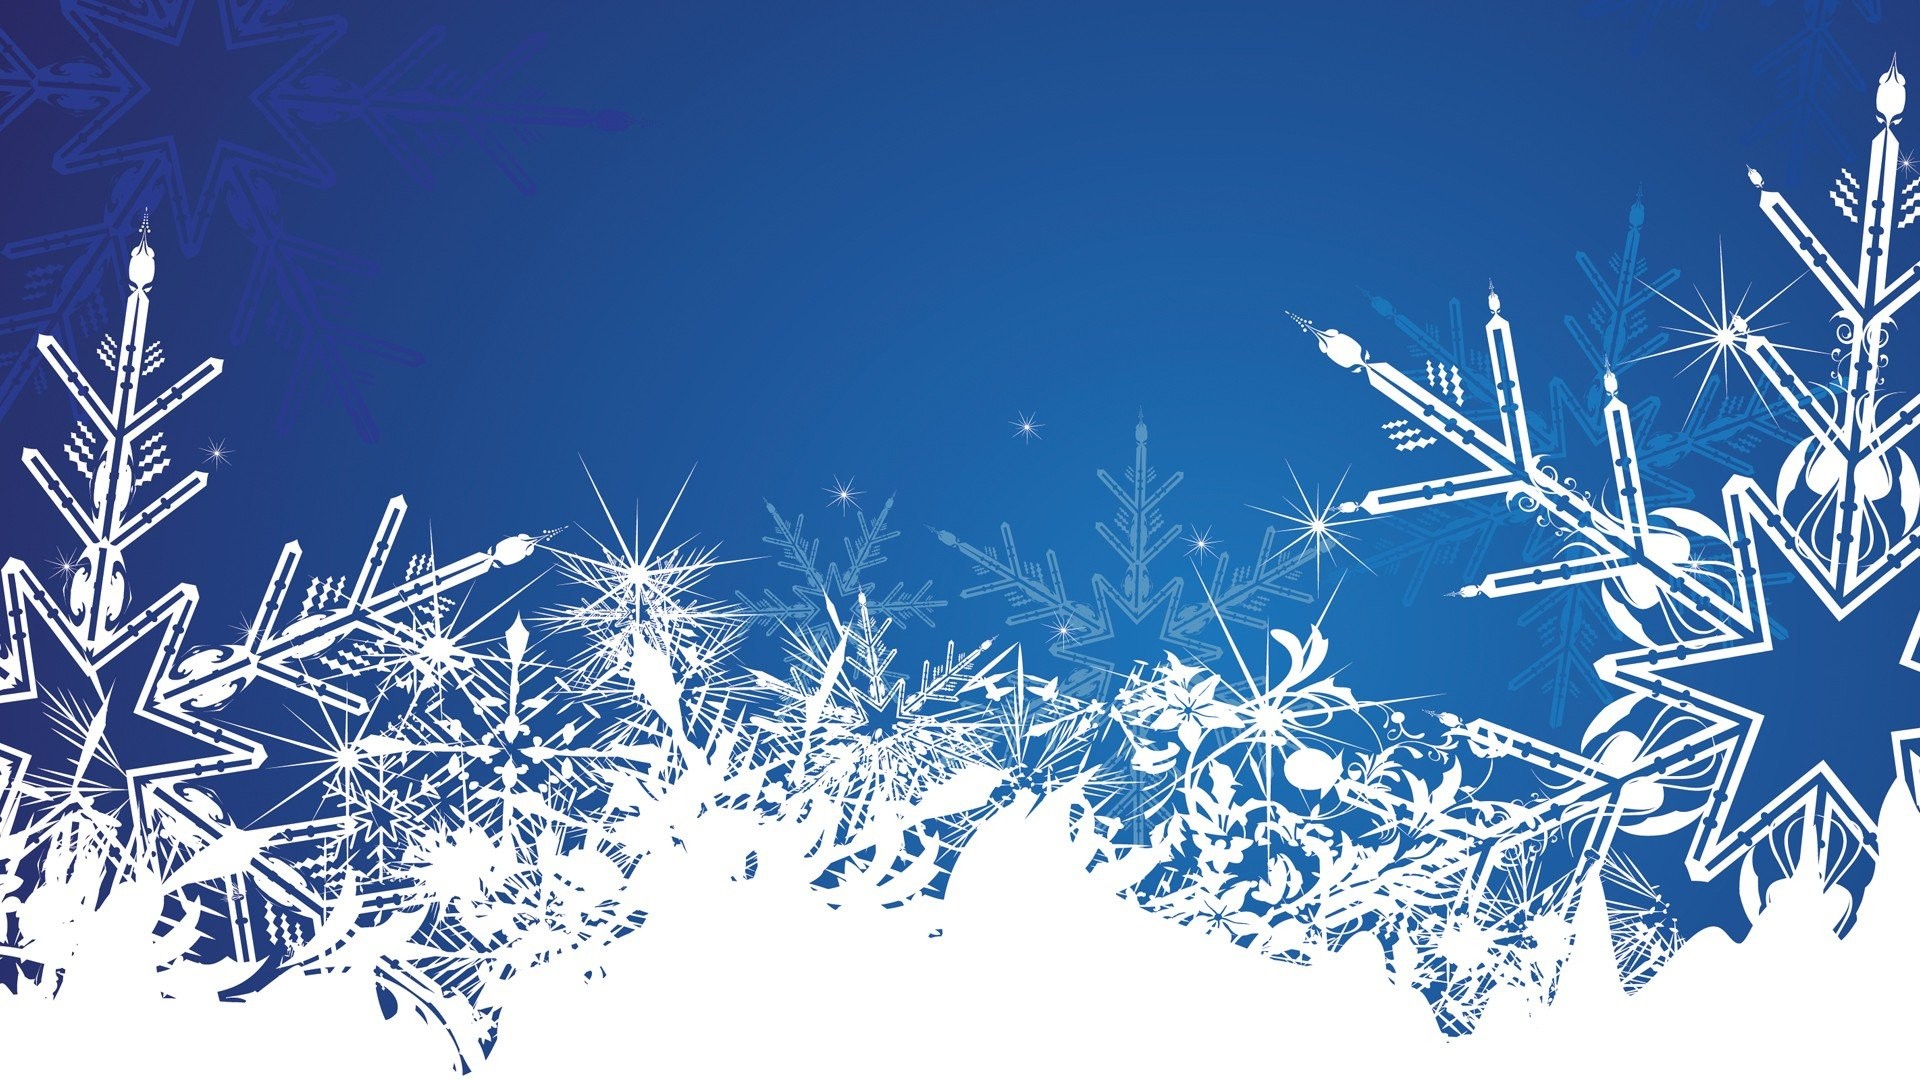 1920x1080 Winter vectors illustrations snowflakes blue background vector art wallpaper  |  | 259126 | WallpaperUP